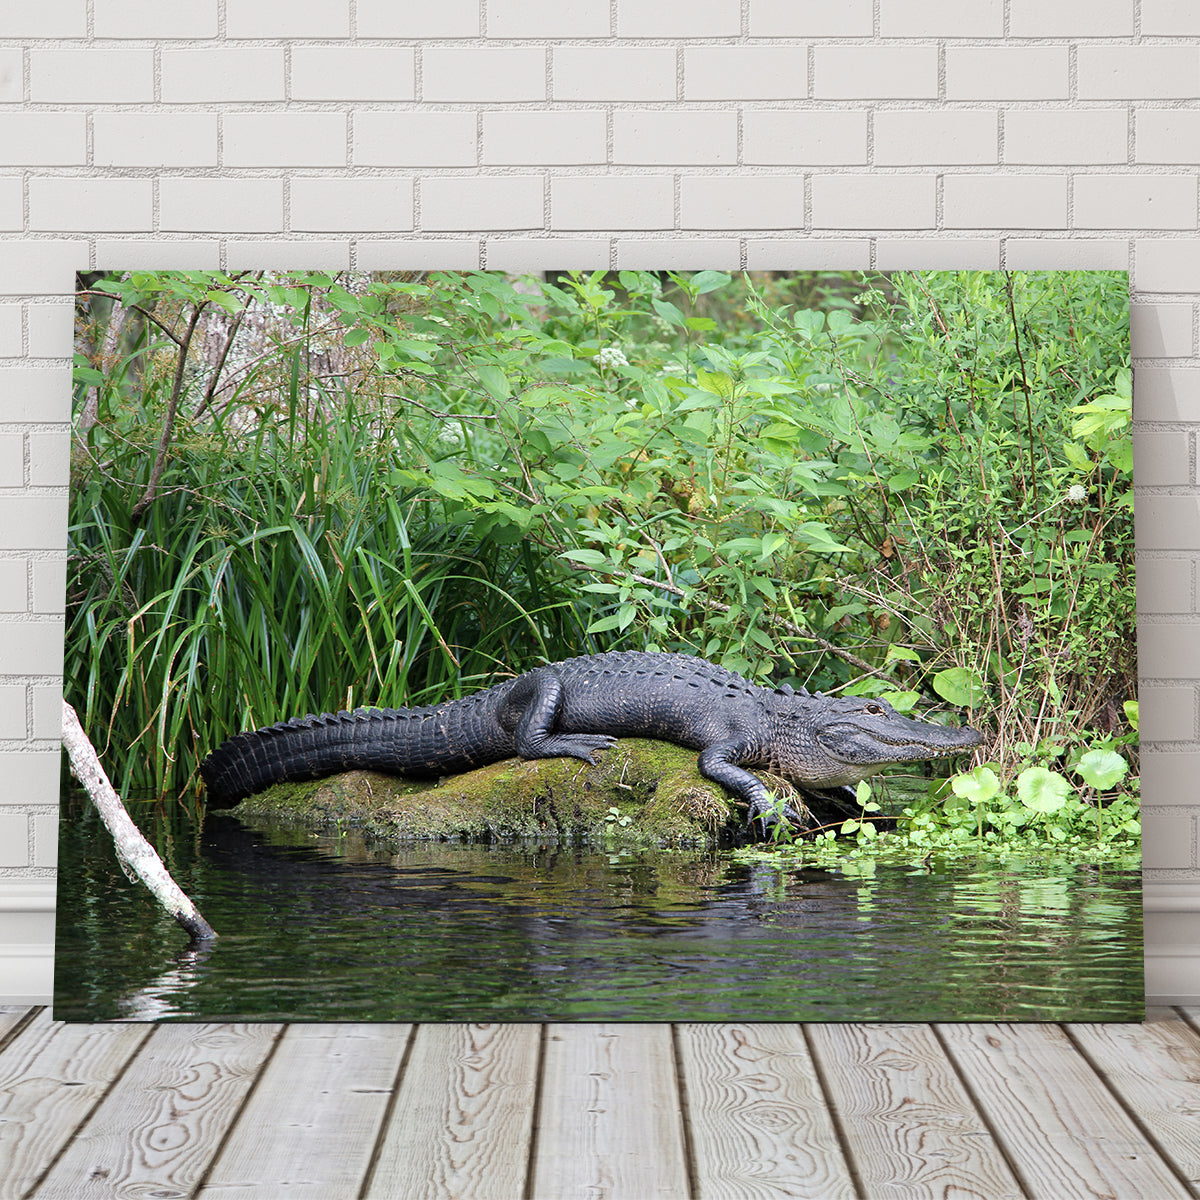 Florida Alligator - Silver Springs State Park